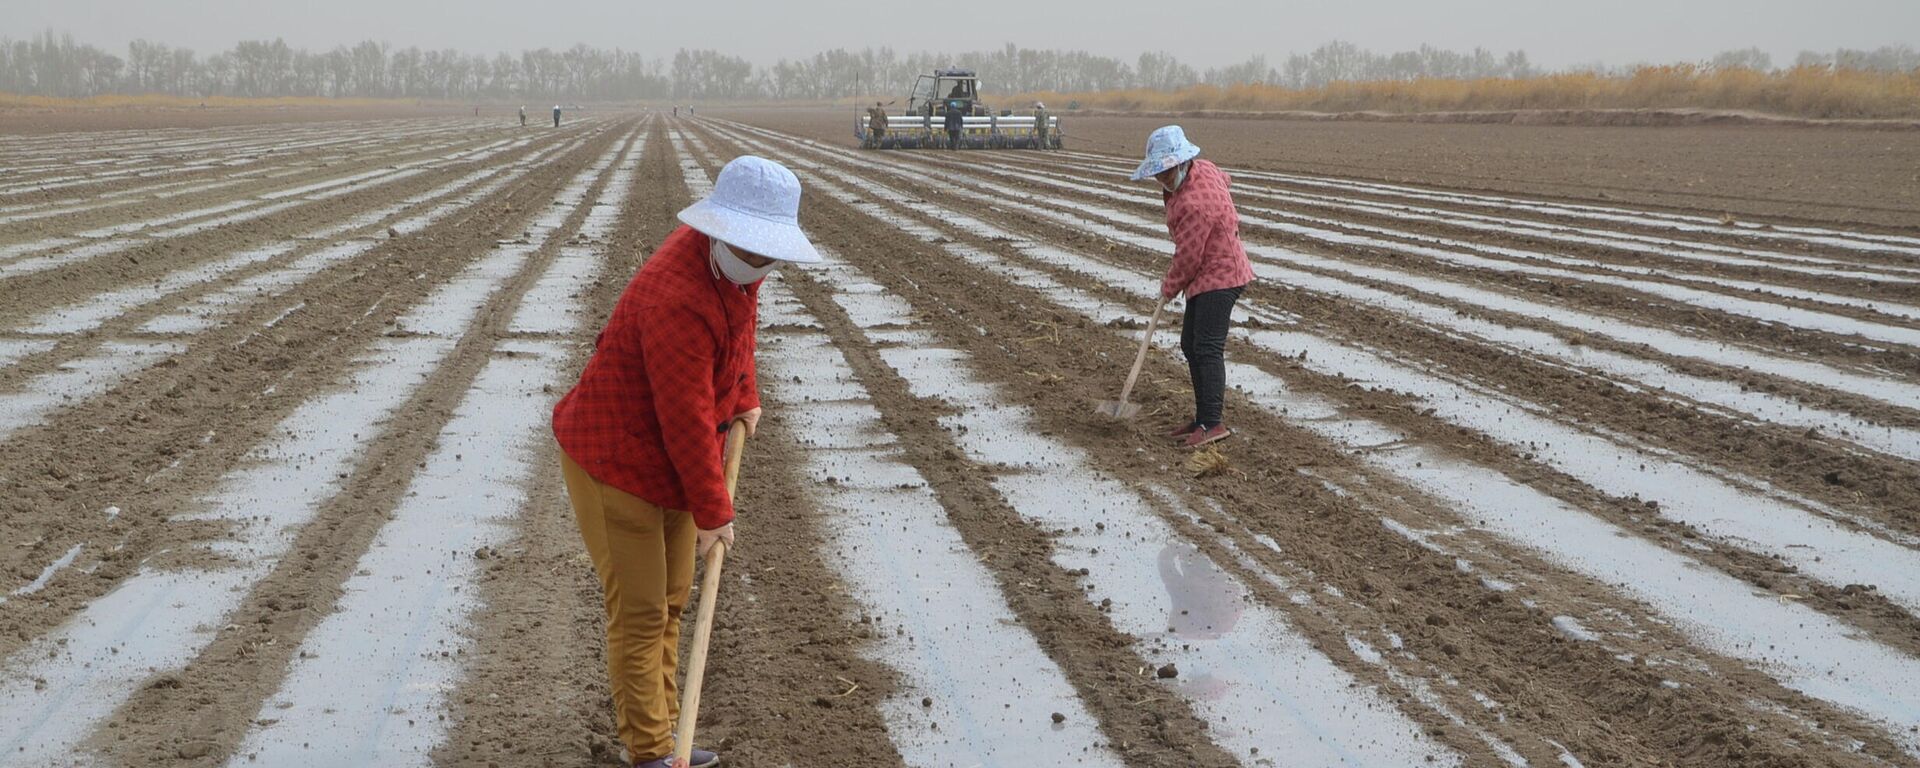 Un cultivo de algodón en Xinjiang - Sputnik Mundo, 1920, 29.03.2021